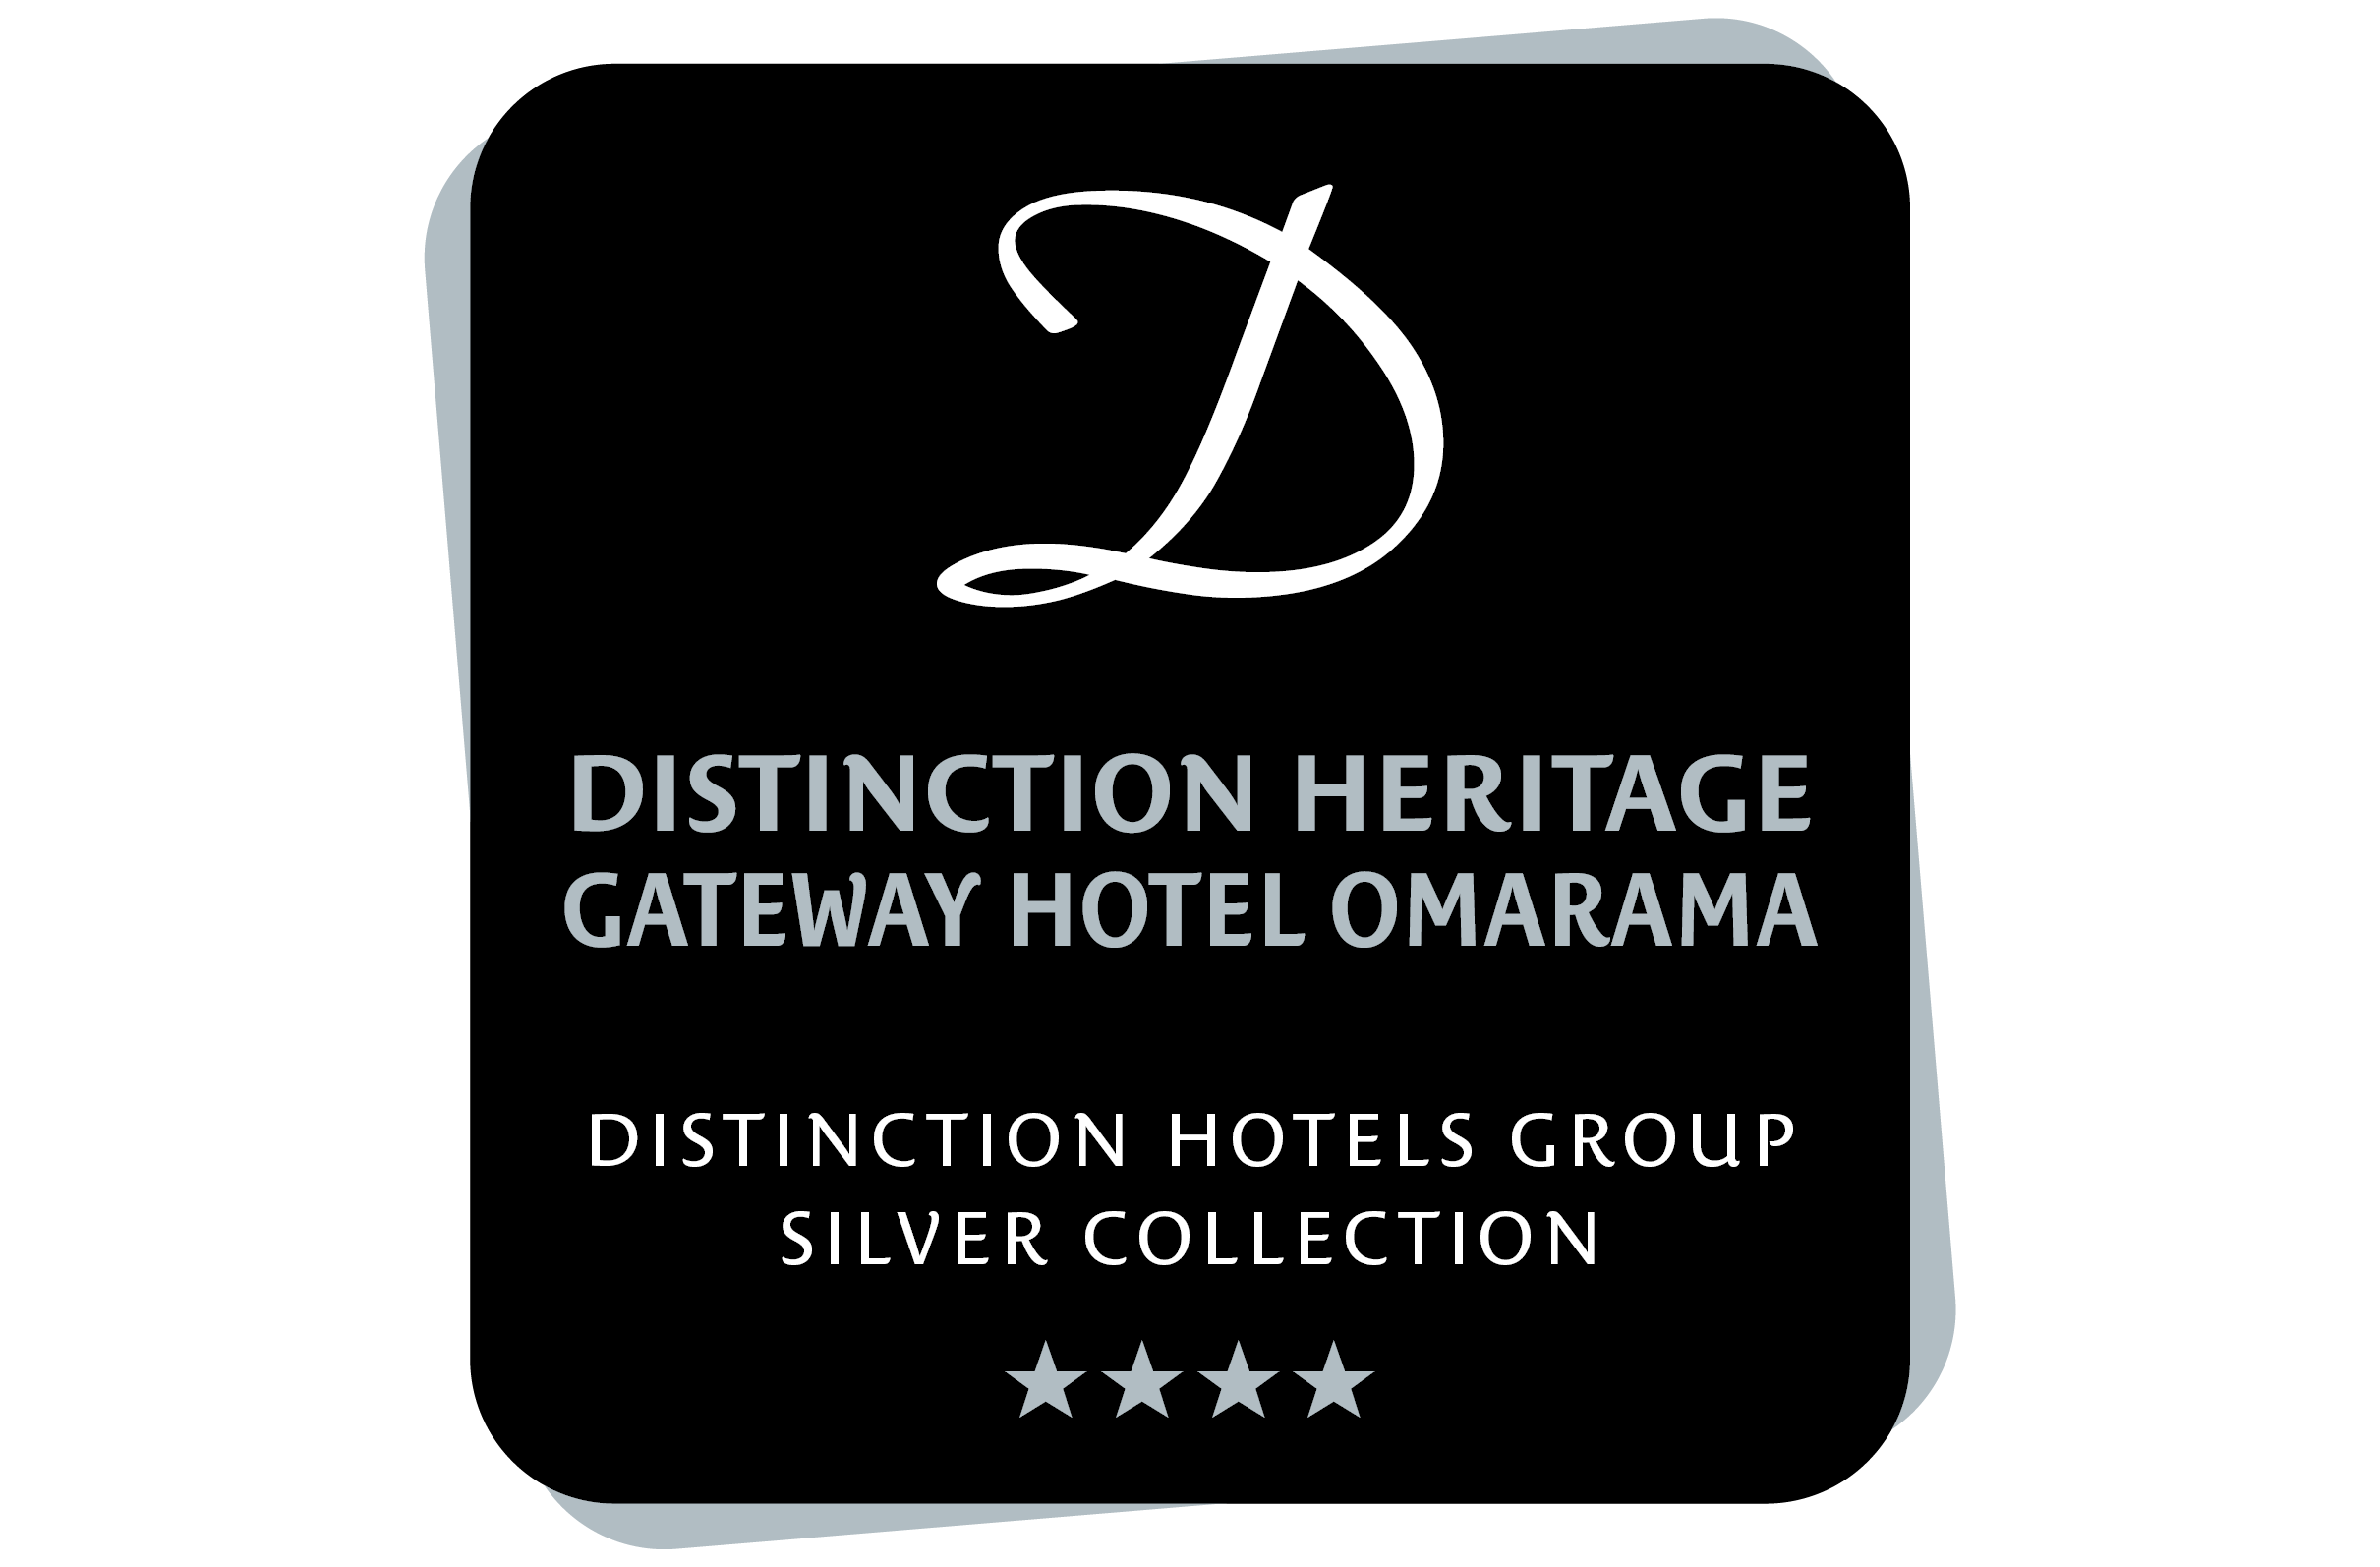 
Distinction Heritage Gateway Hotel Omarama